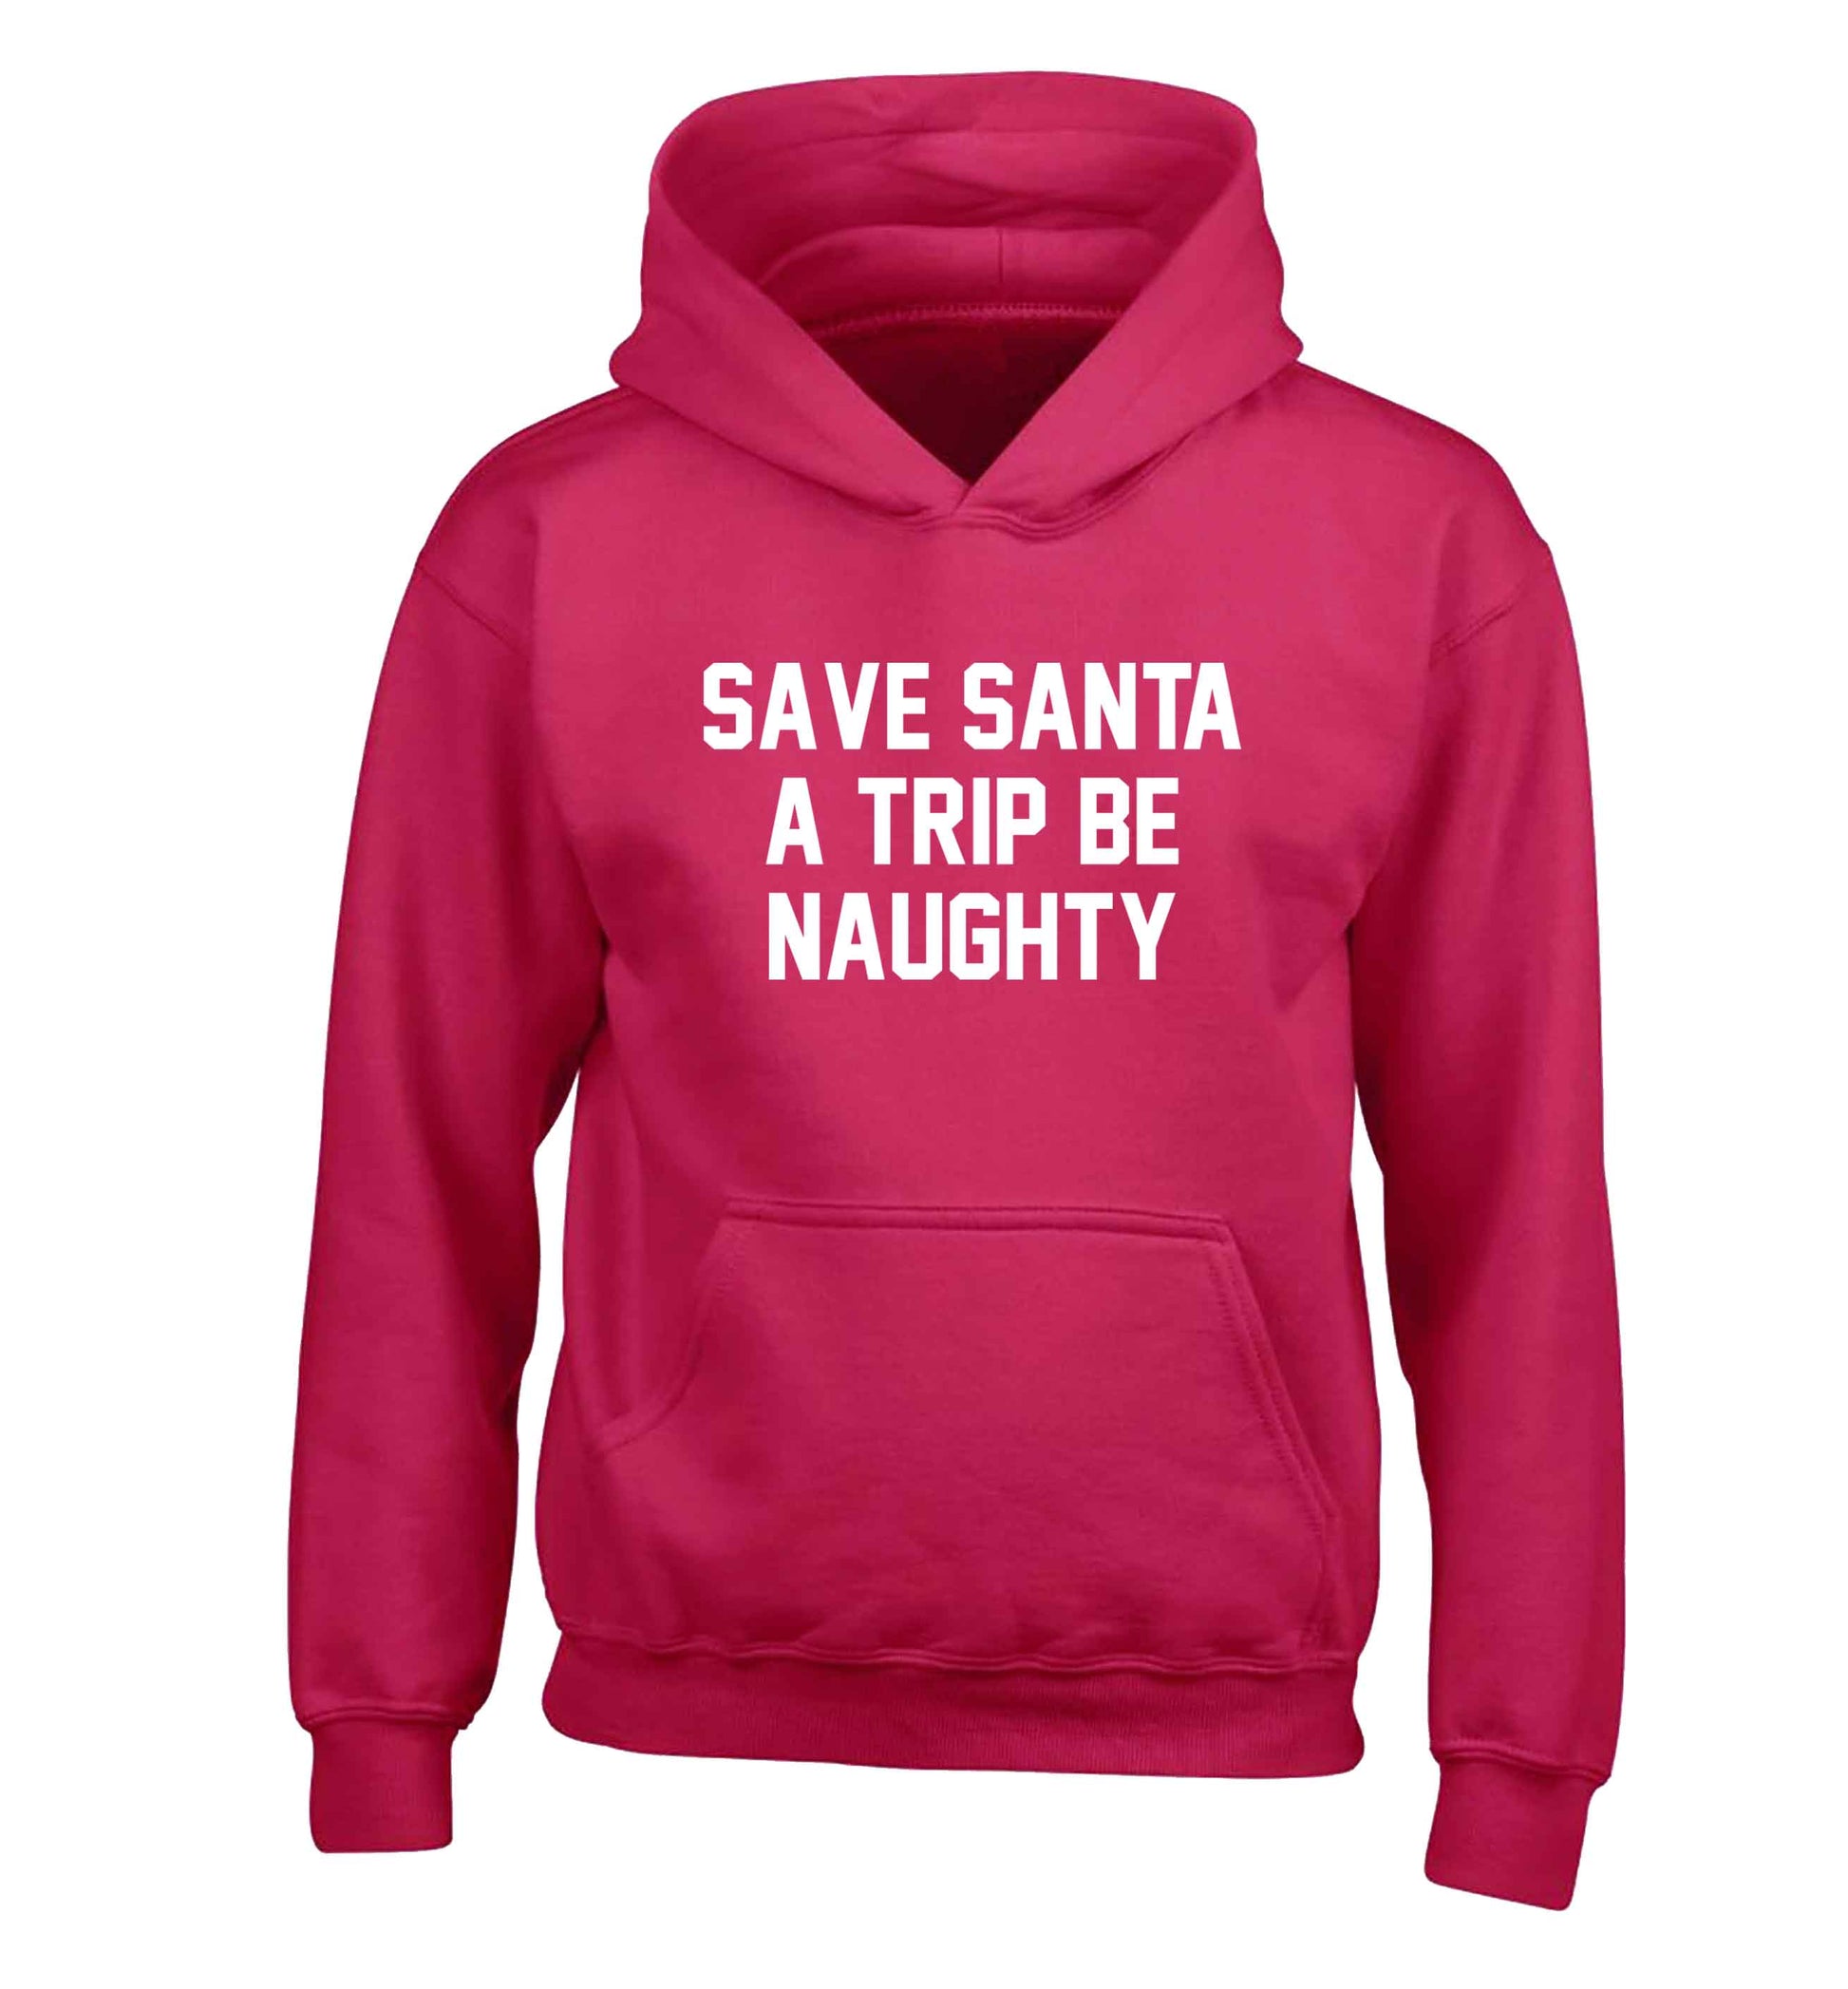 Save Santa a trip be naughty children's pink hoodie 12-13 Years